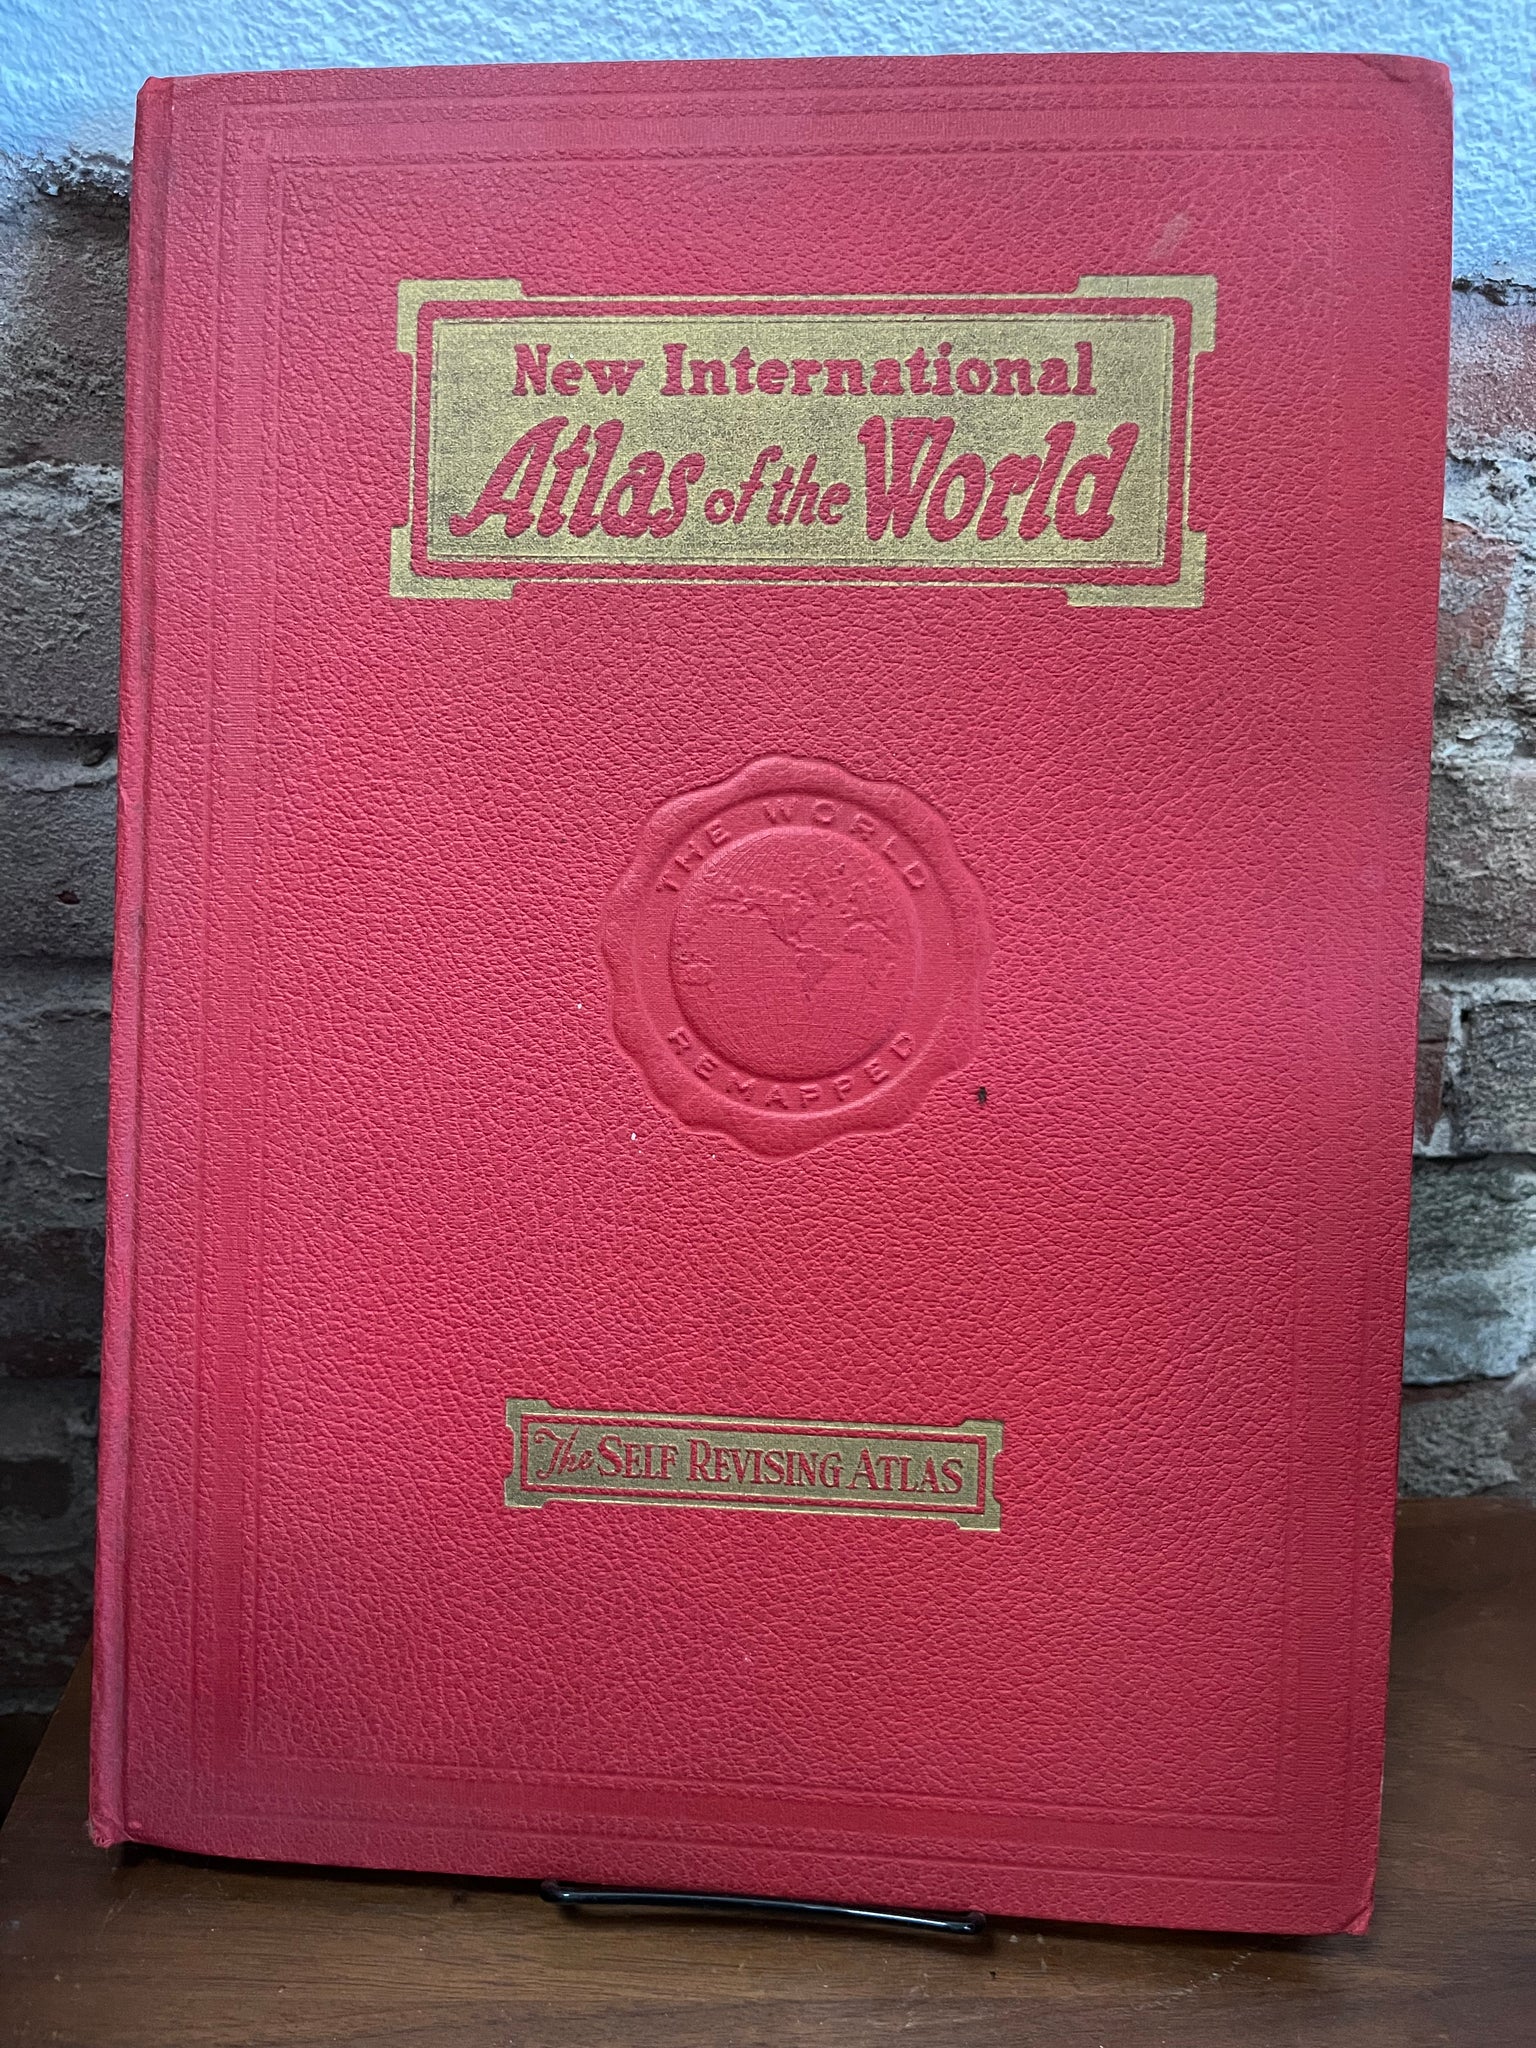 New International Atlas of the World